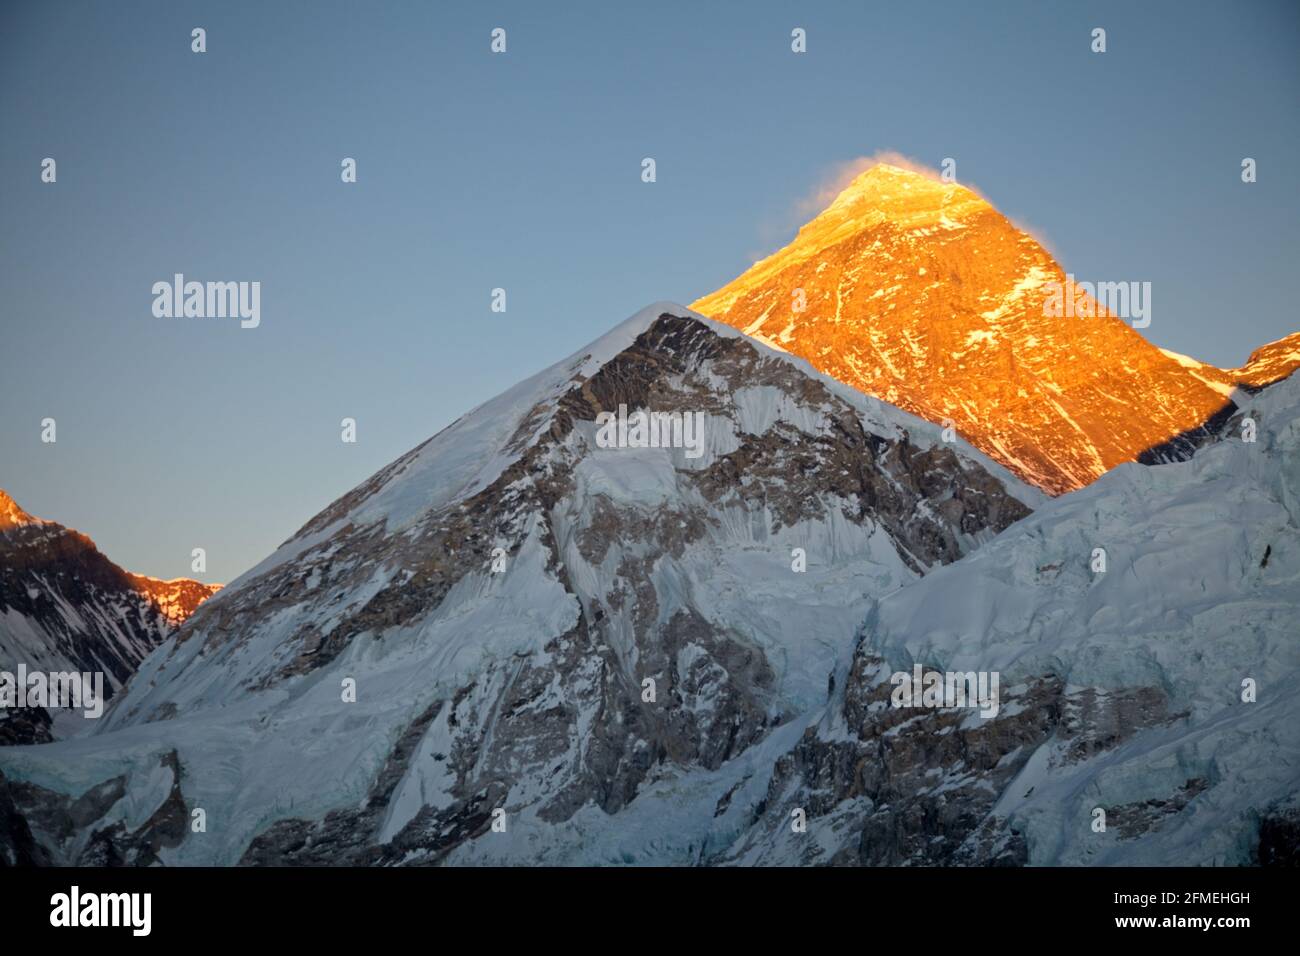 Spettacolare tramonto arancione Monte Everest da Kala Patthar Lookout, Nepal. Foto Stock